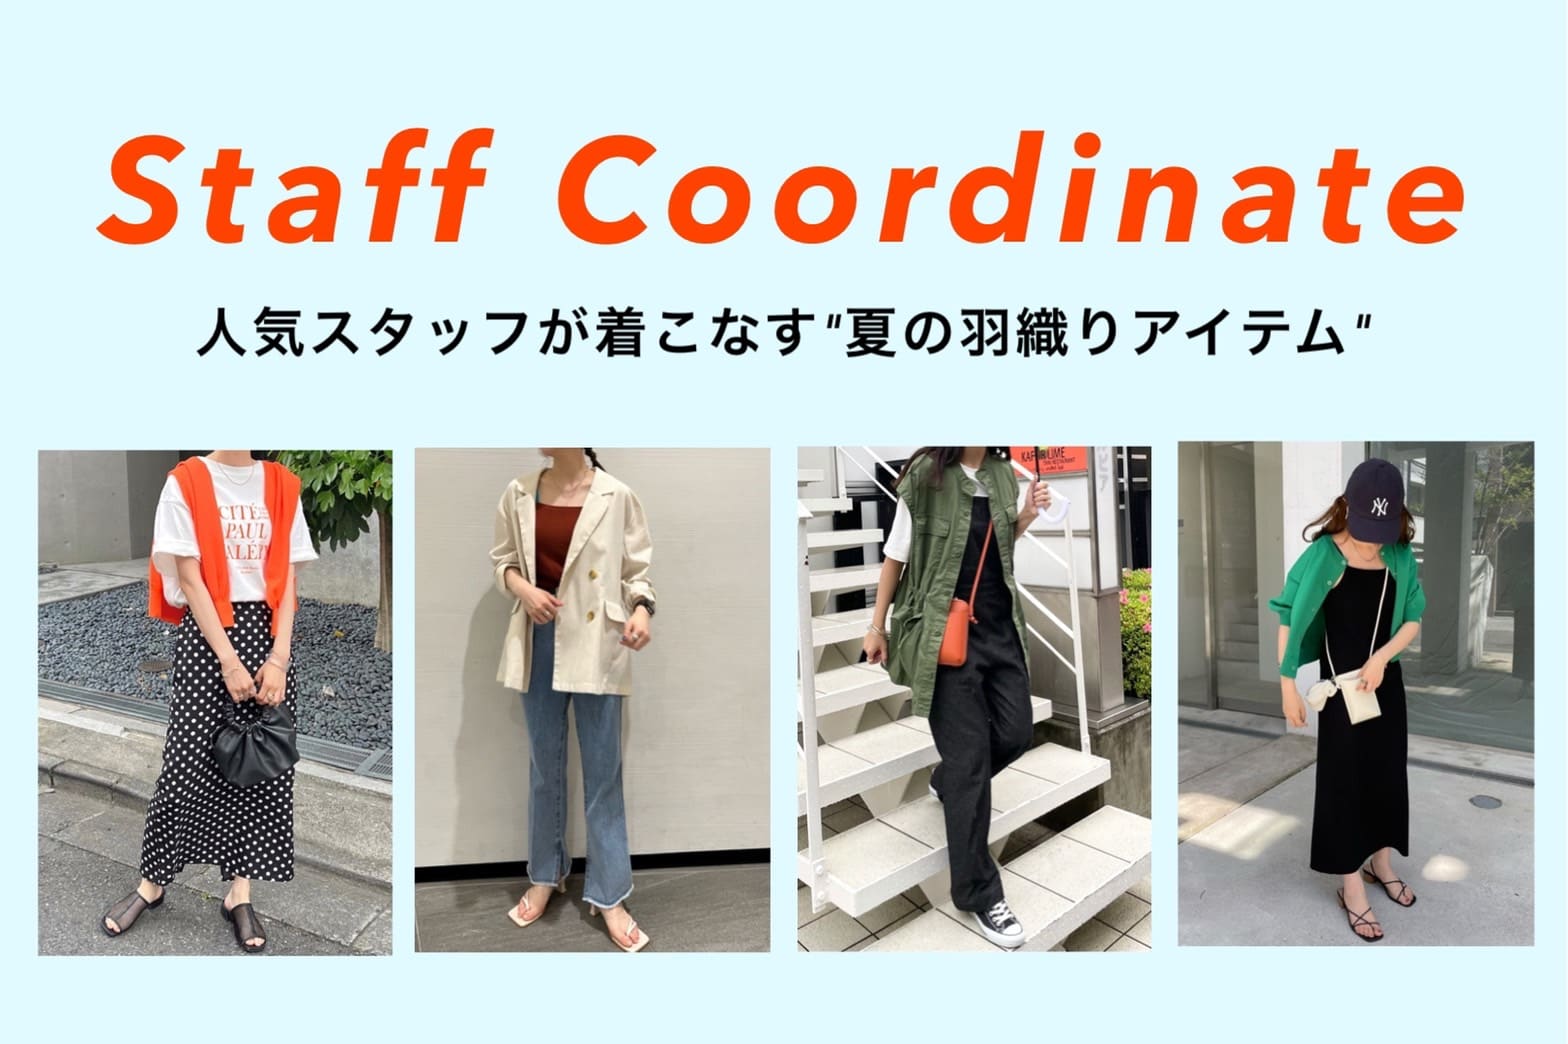 Discoat 【STAFF COORDINATE】人気スタッフが着こなす”夏の羽織りアイテム”